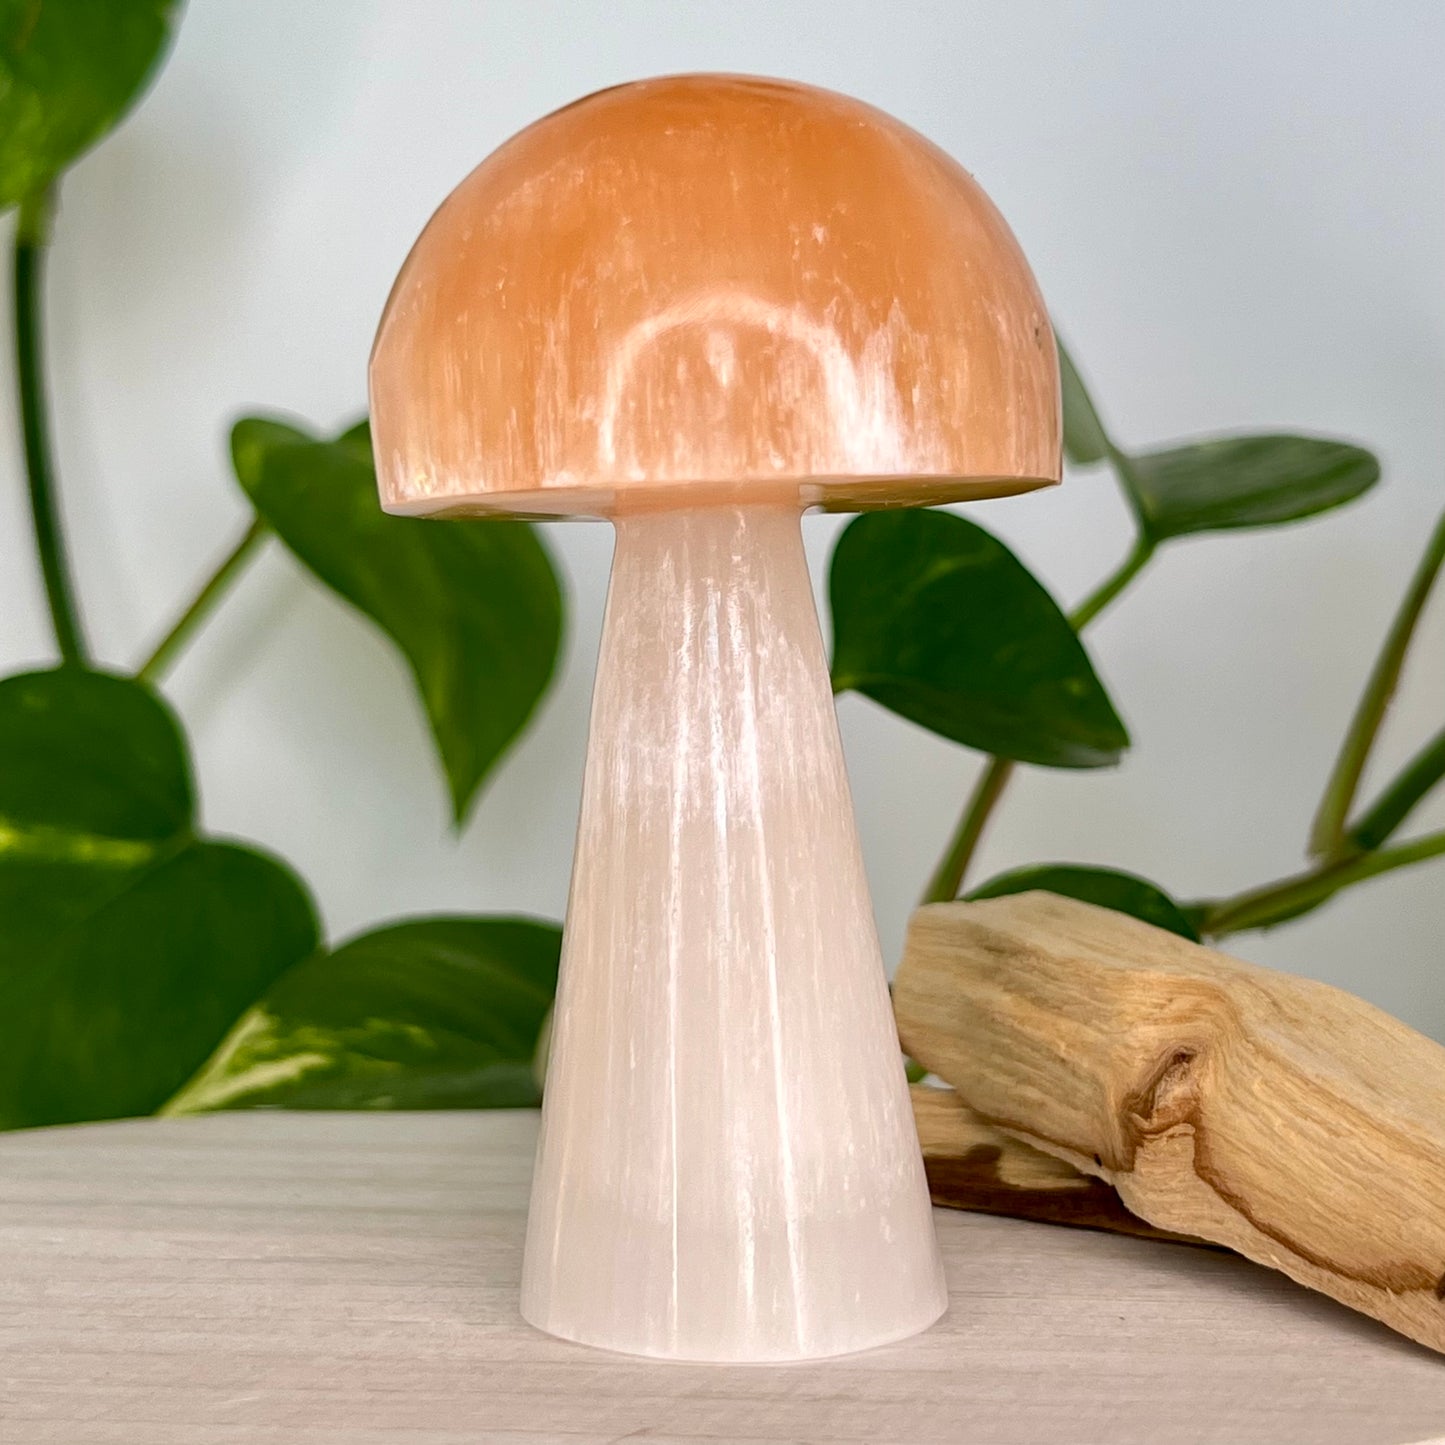 Selenite // White // Orange // Mushroom